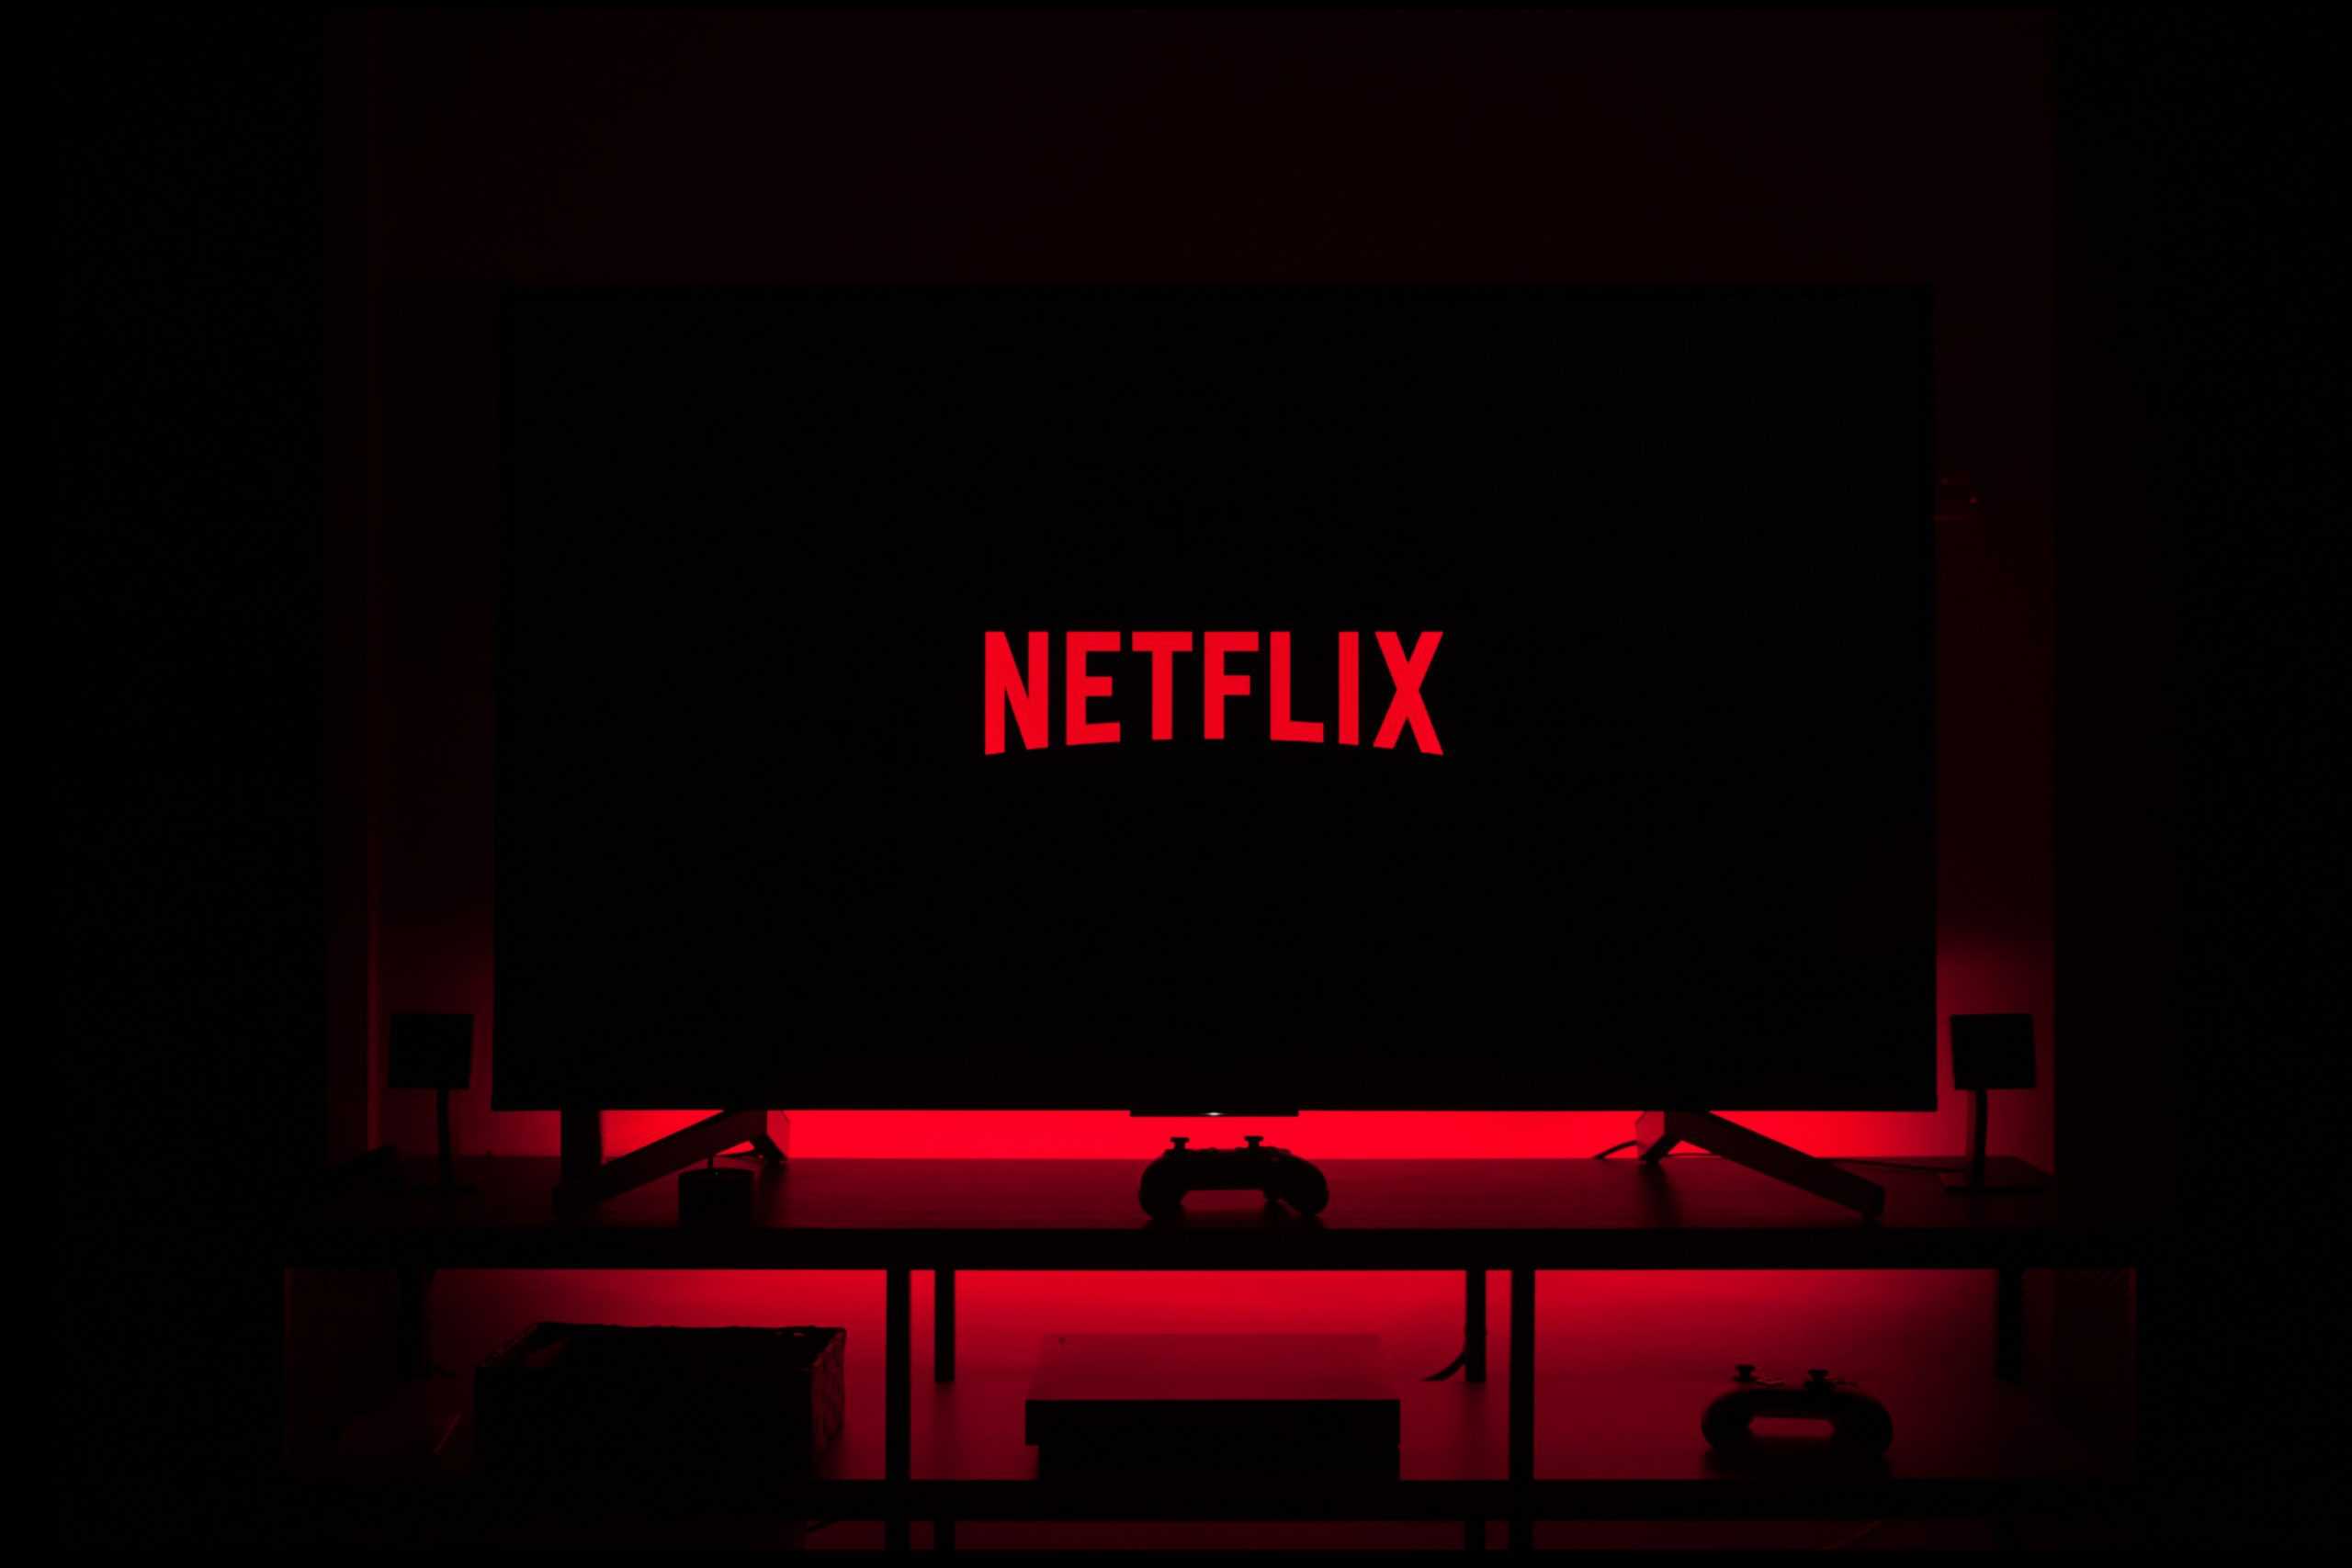 Is Netflix business sustainable?